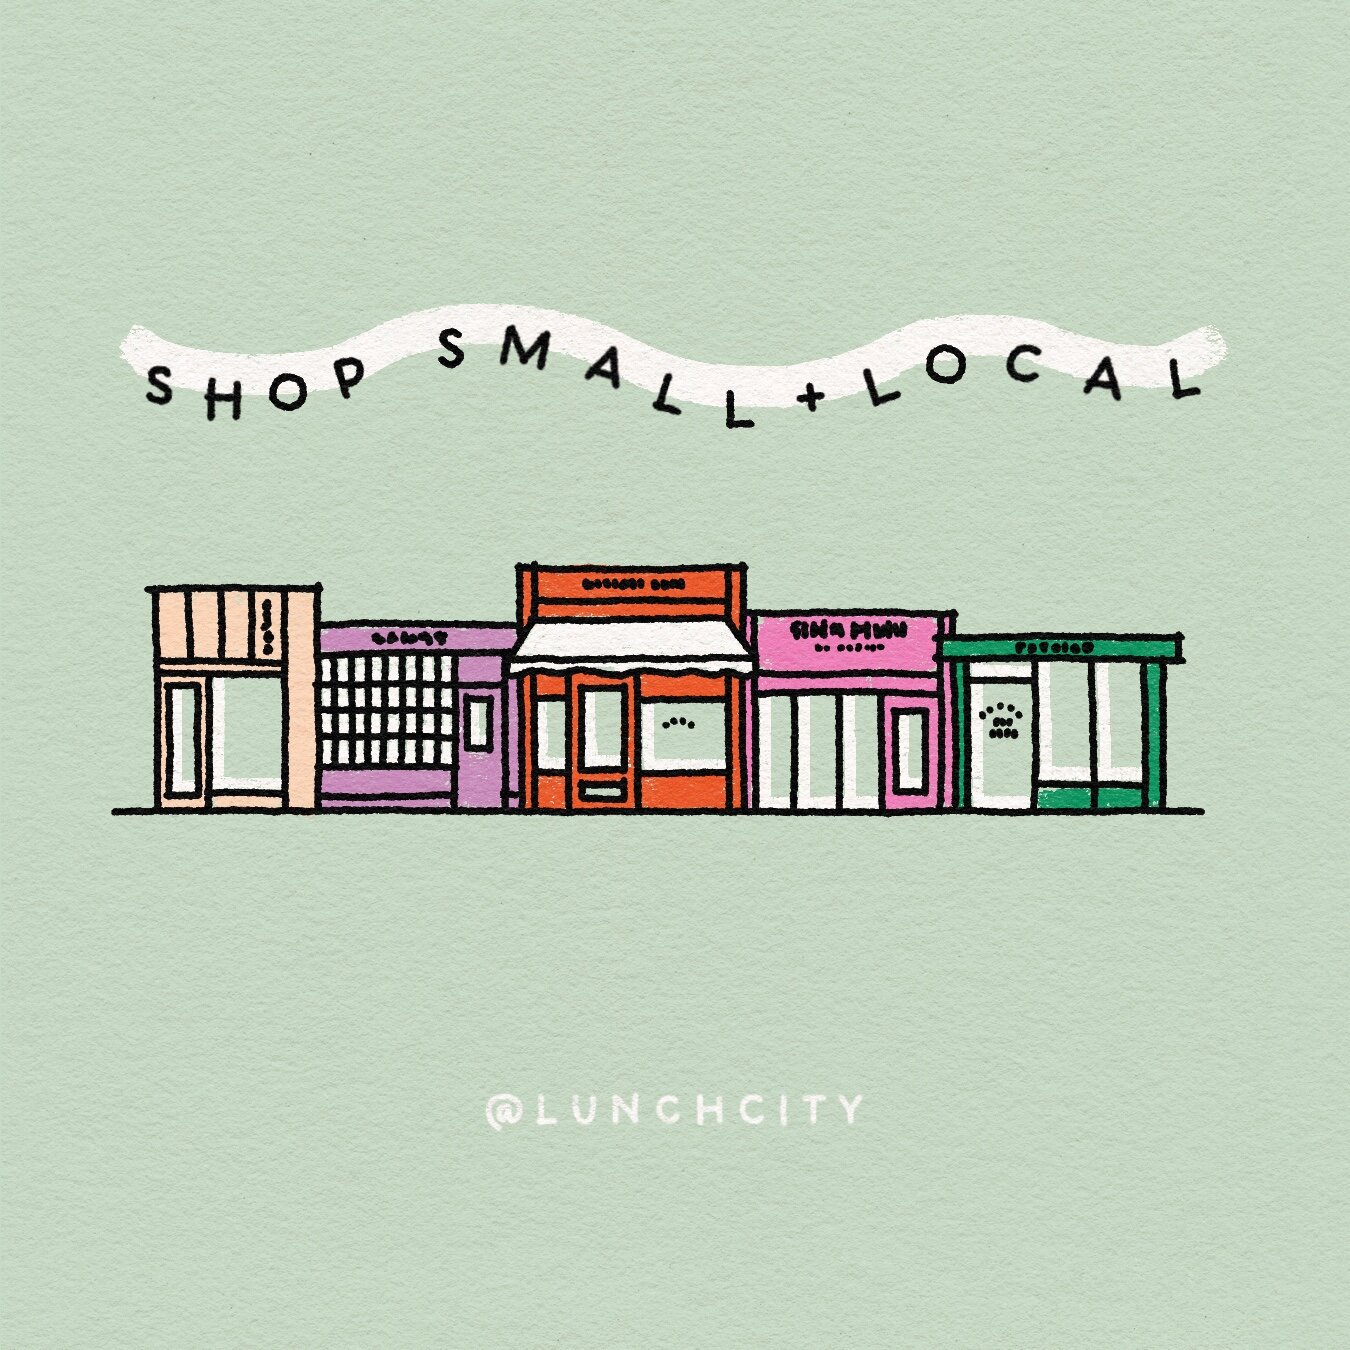 Lunch City Studio - Shop Small Local.jpg